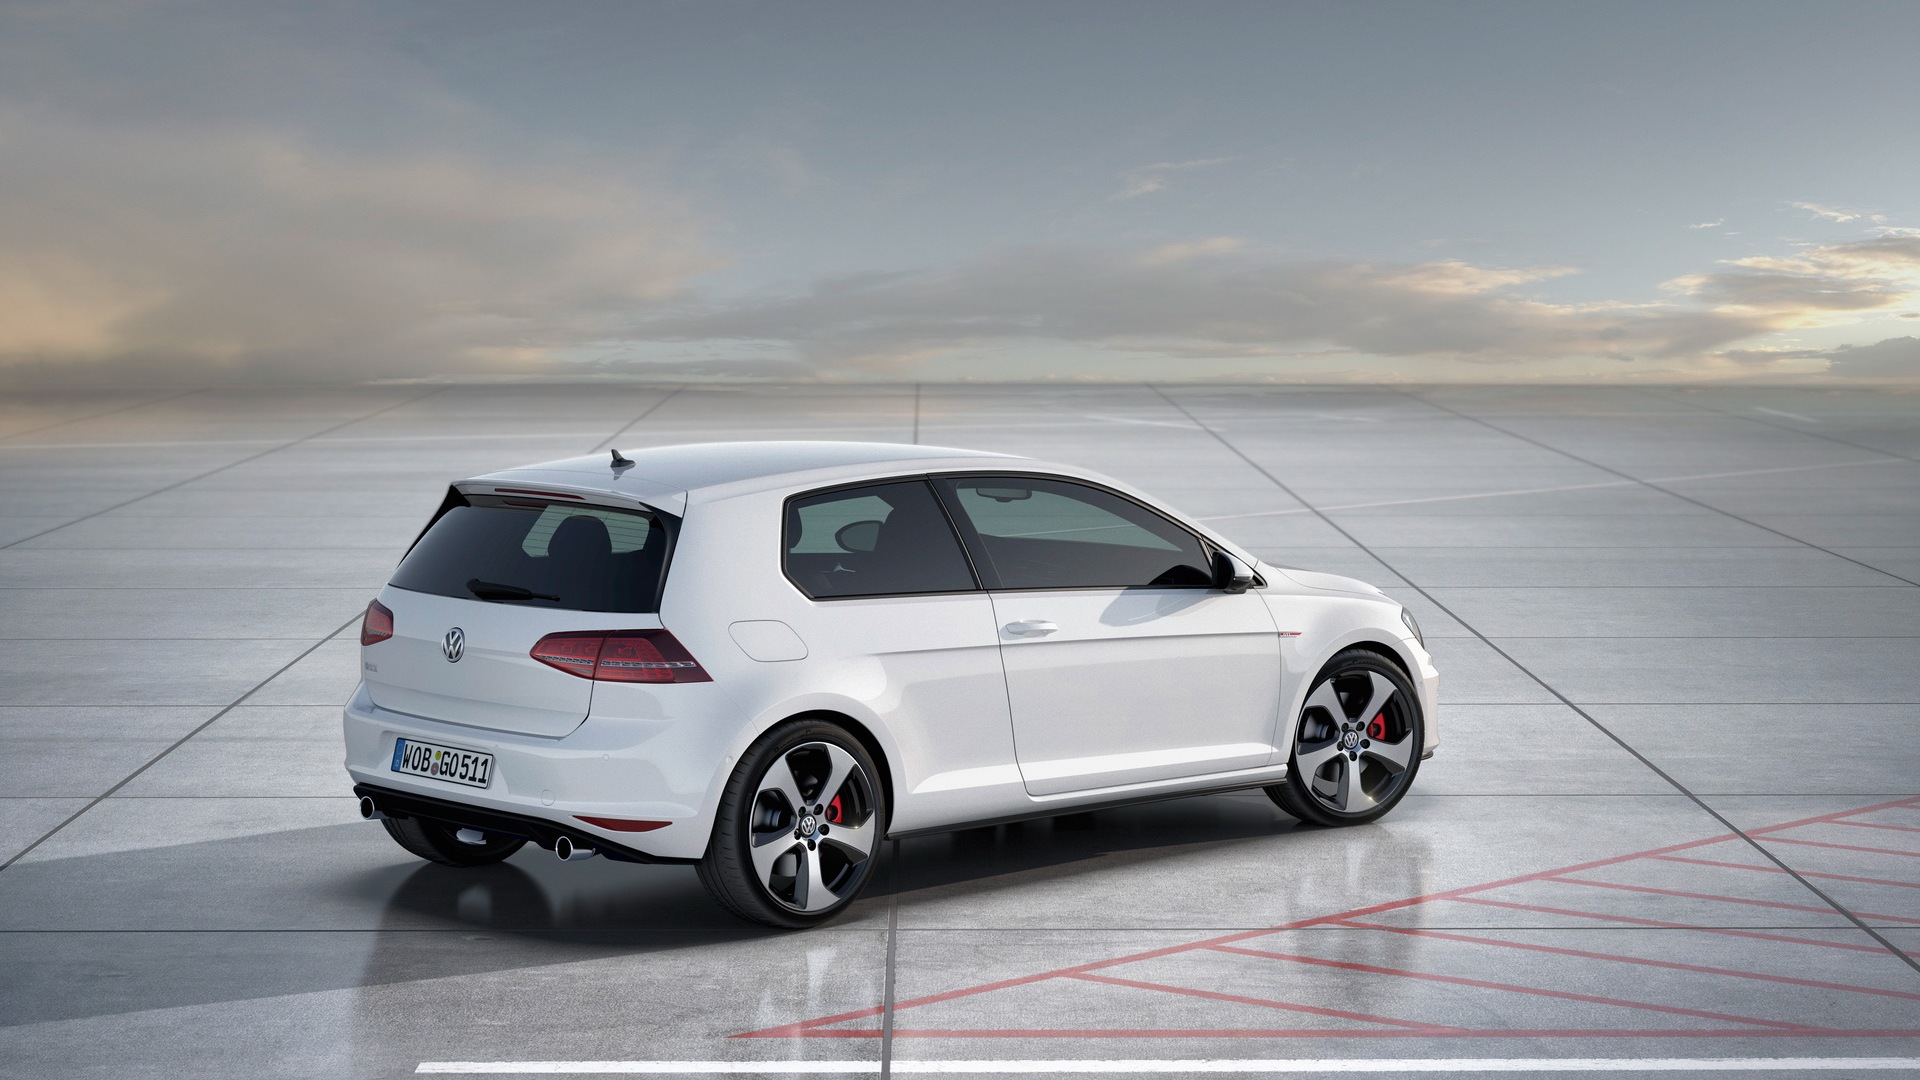 Volkswagen Golf Gti Concept Photos And Wallpaper Tuningnews